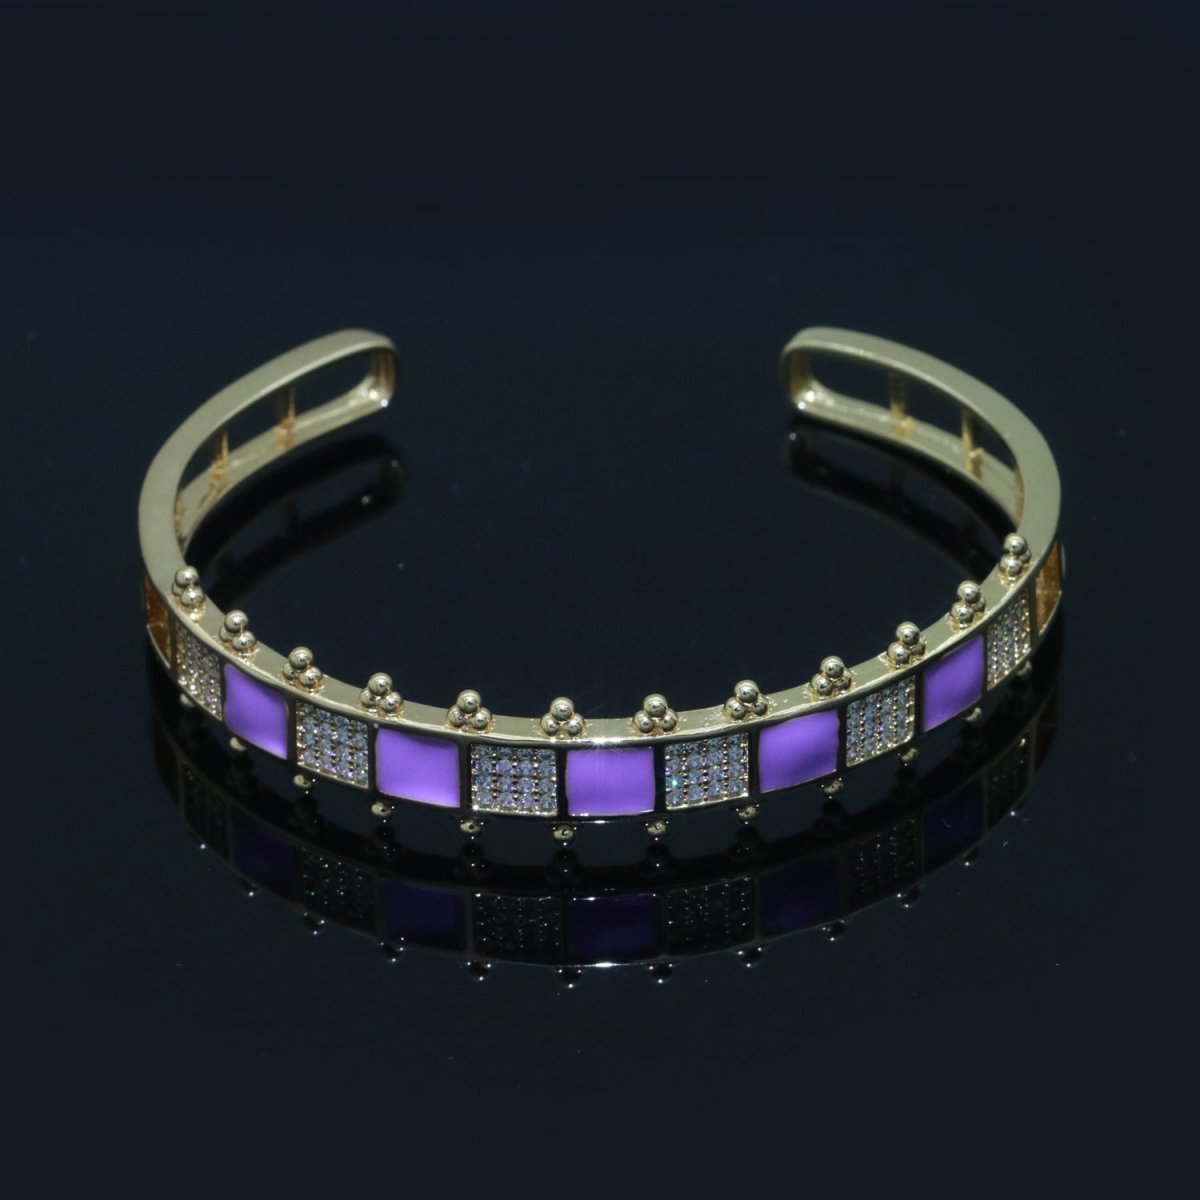 Micro Pave Checker Cuff Bracelet, 14K Gold Filled Bangle Enamel Bracelet Adjustable Bracelet | WA-163 to WA-172 Clearance Pricing - DLUXCA